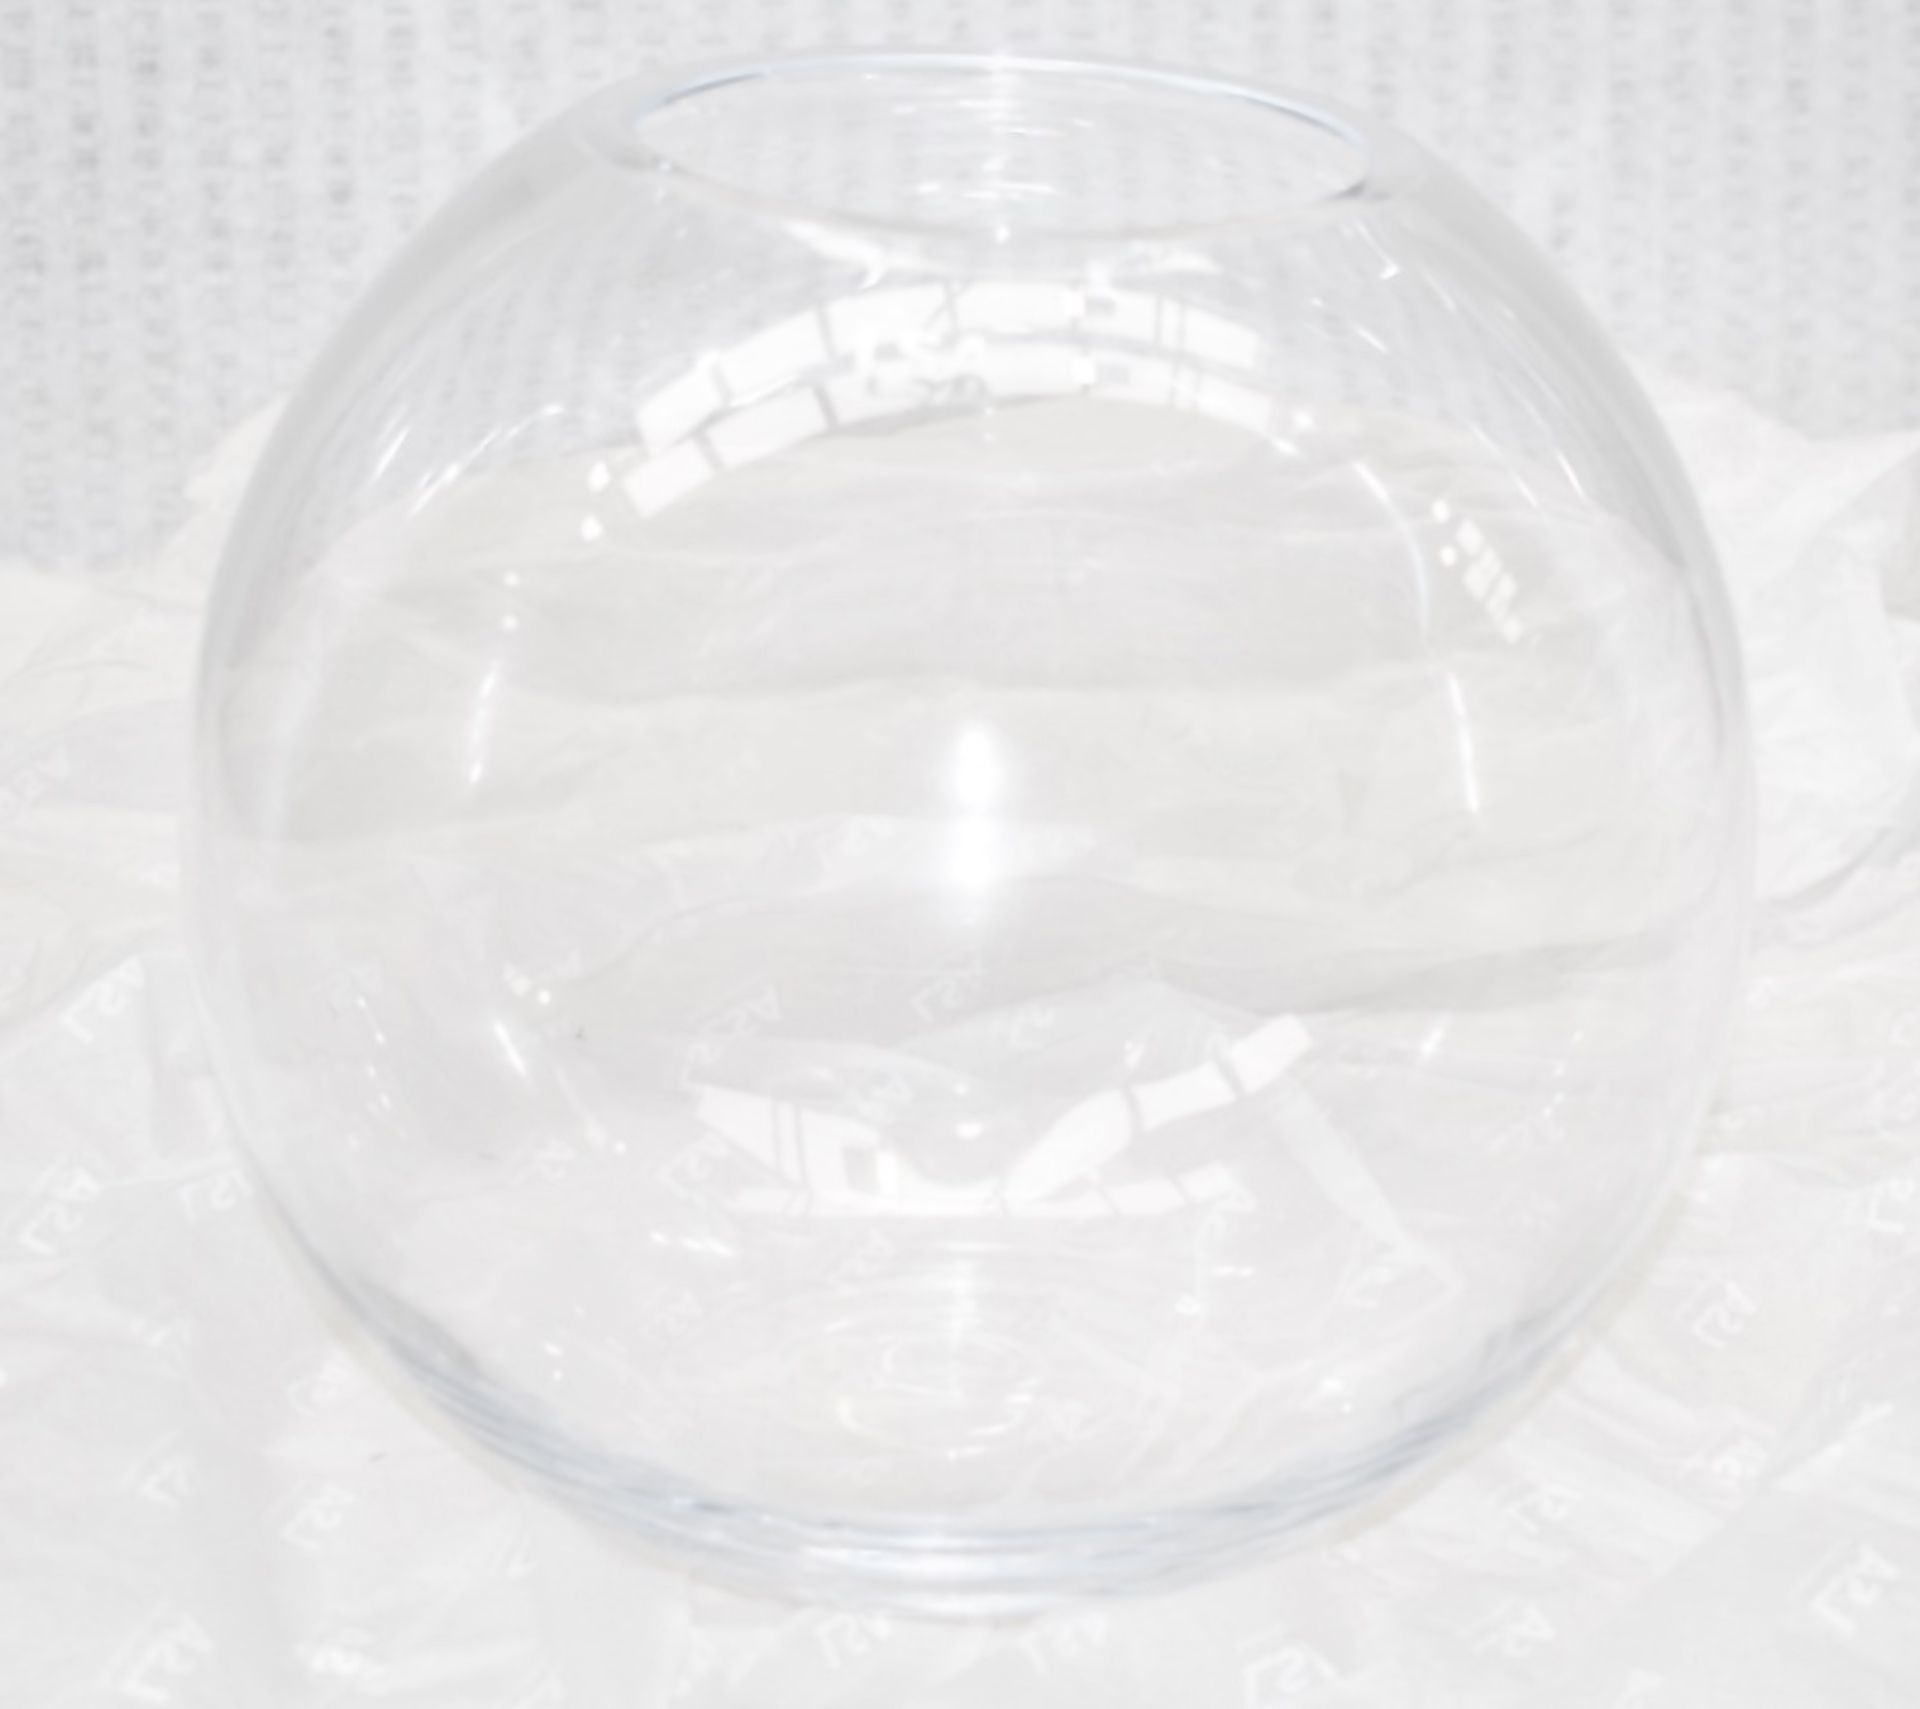 1 x LSA 'Globe' Luxury Mouthblown Glass Spherical Flower Vase, 24cm - Original Price £50.00 - Boxed - Image 3 of 4